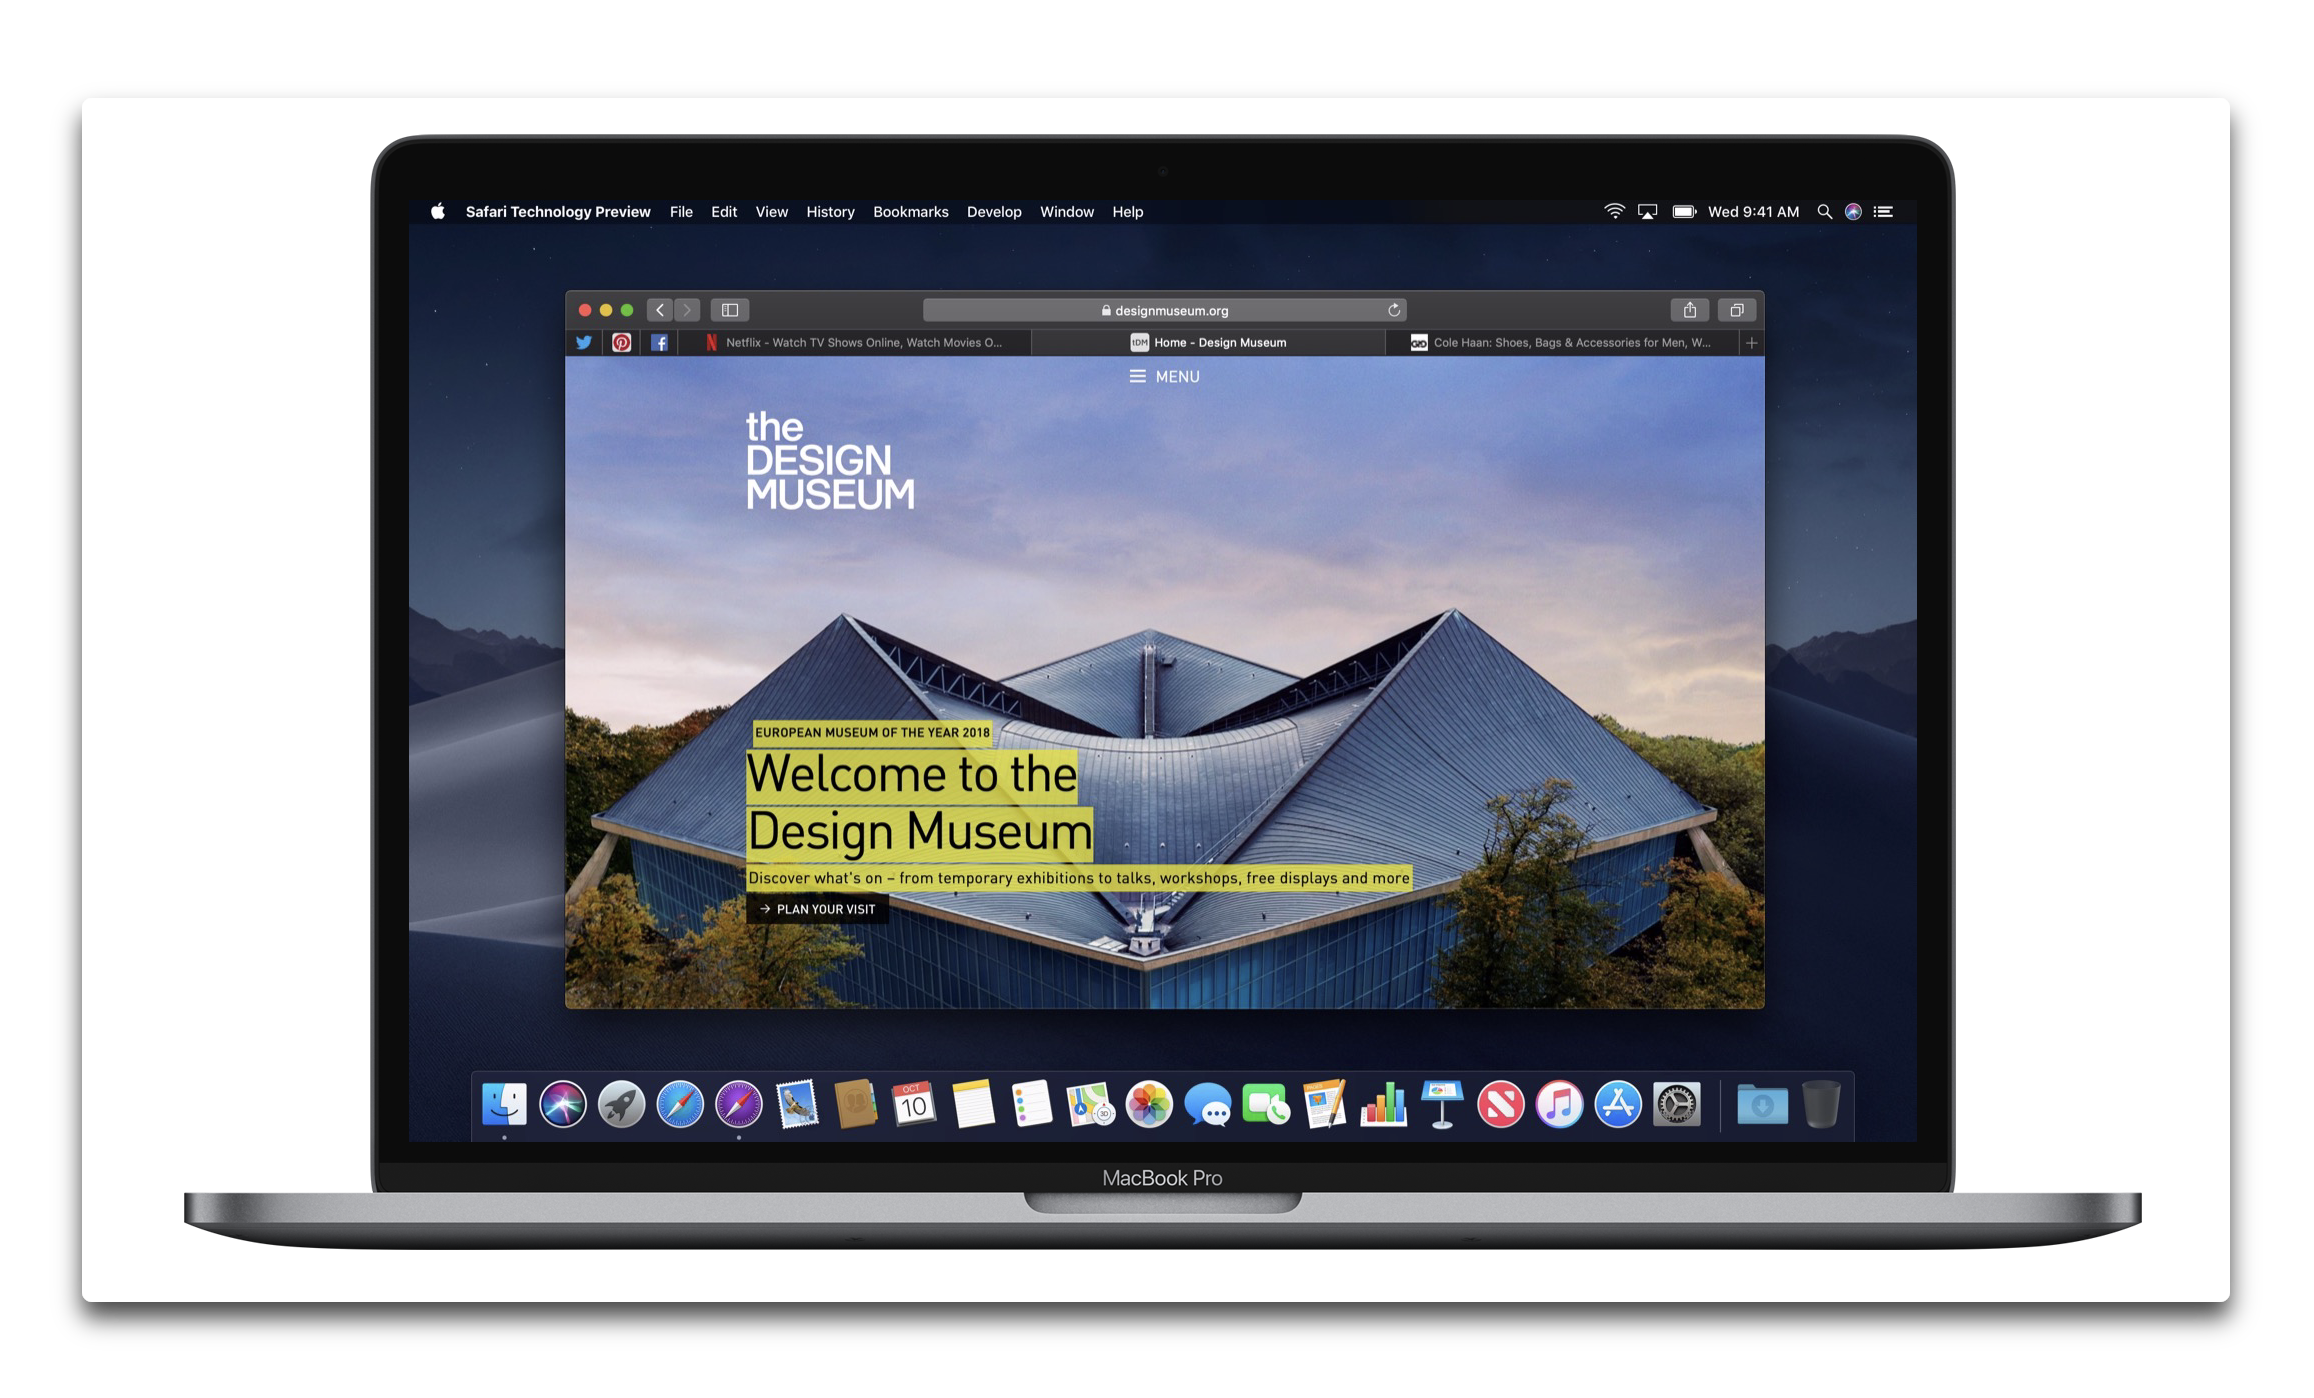 【Mac】Apple，「Safari Technology Preview Release 81」を開発者にリリース